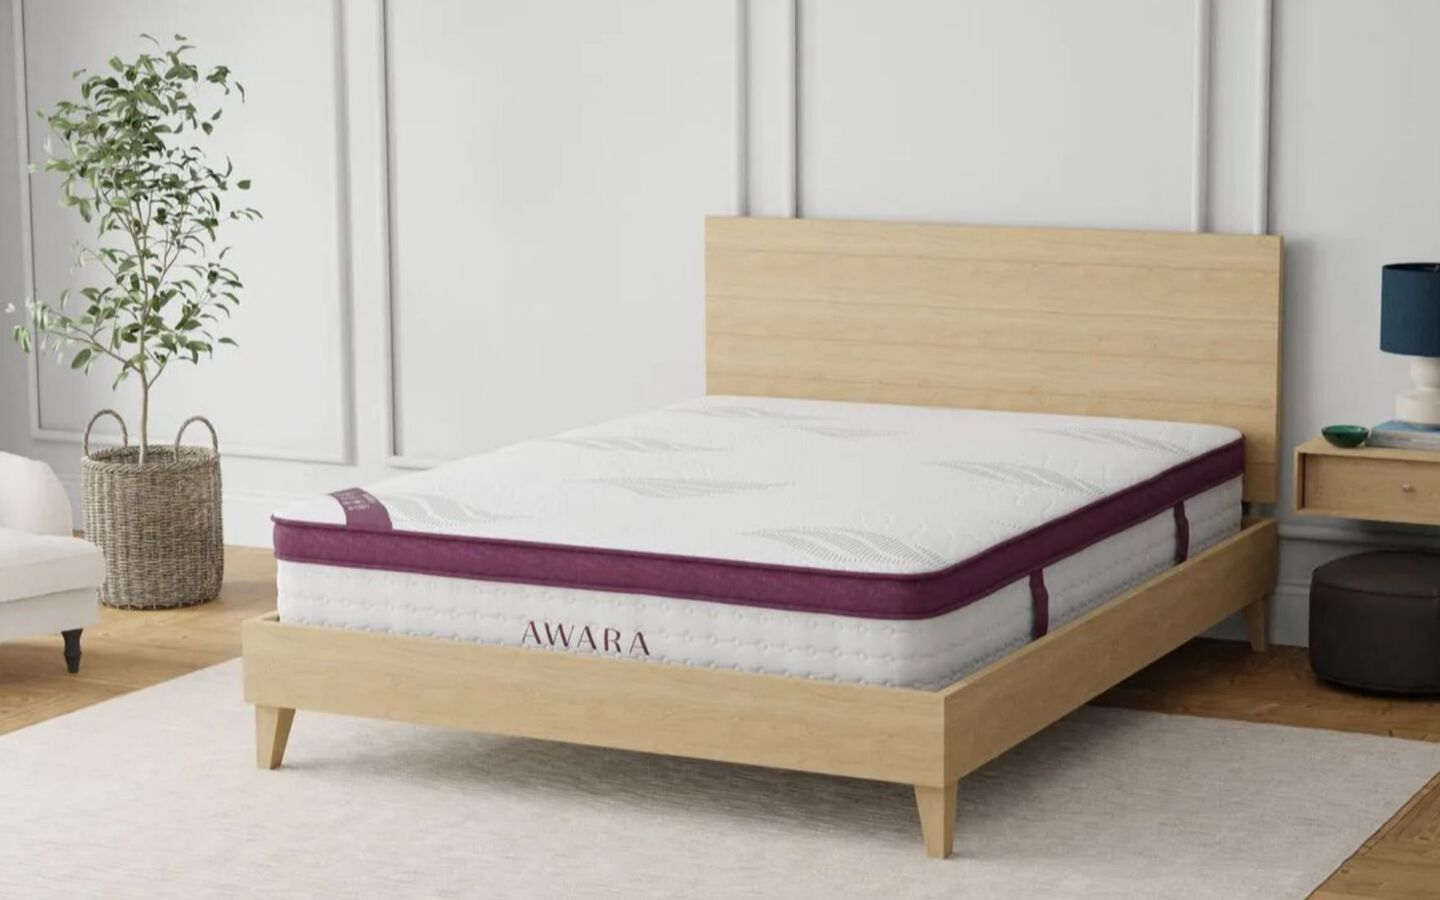 Purple and white Awara mattress on a light wooden bedframe